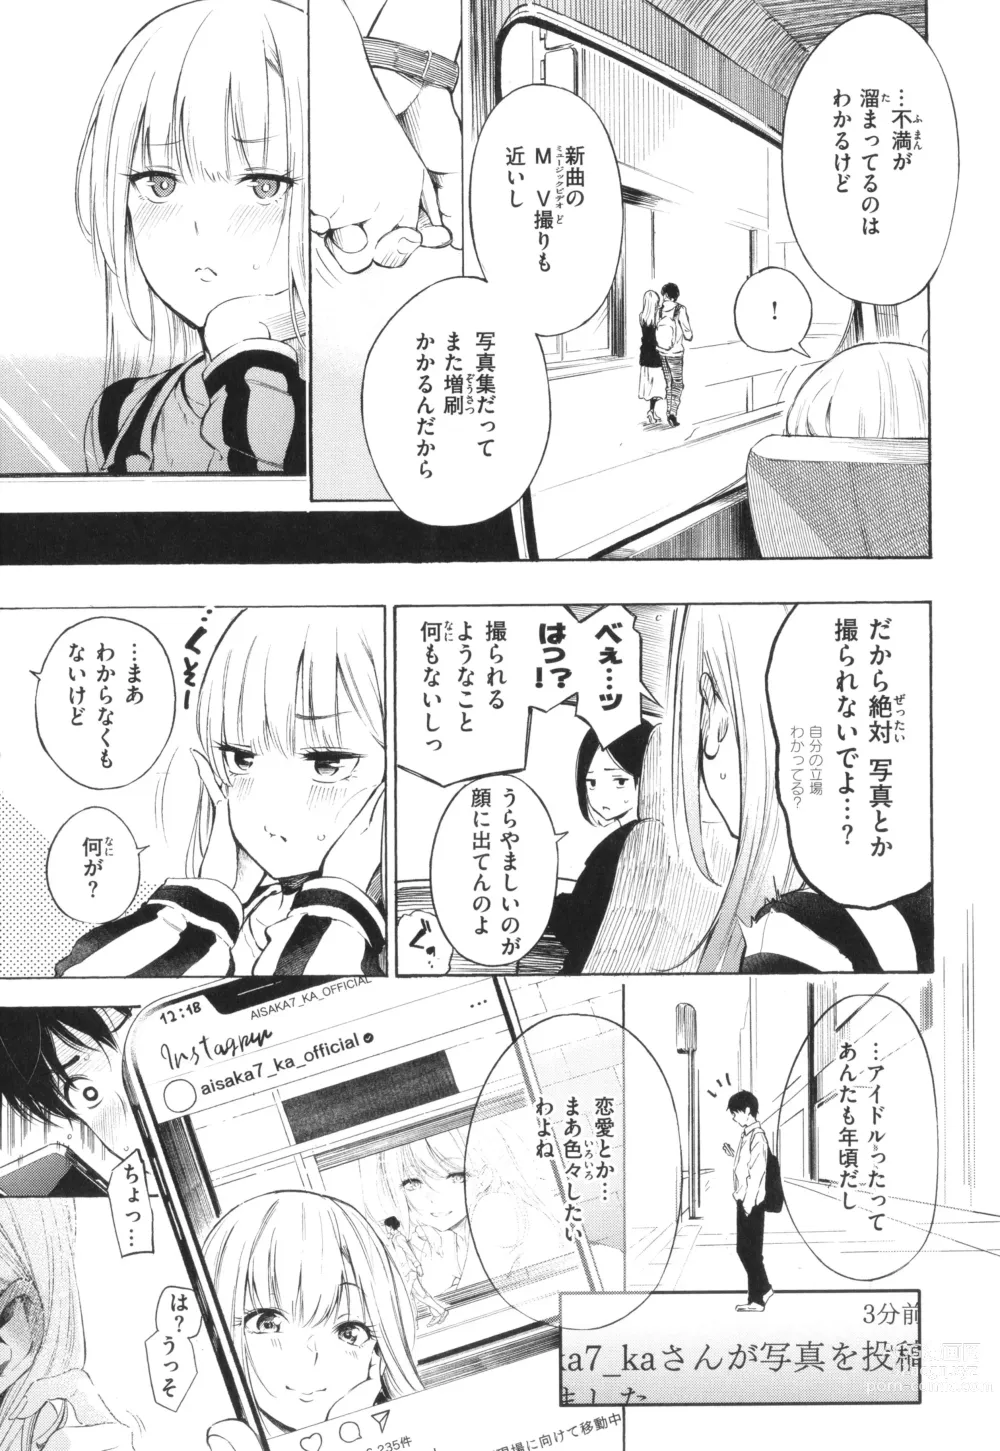 Page 8 of manga Frustration Girls